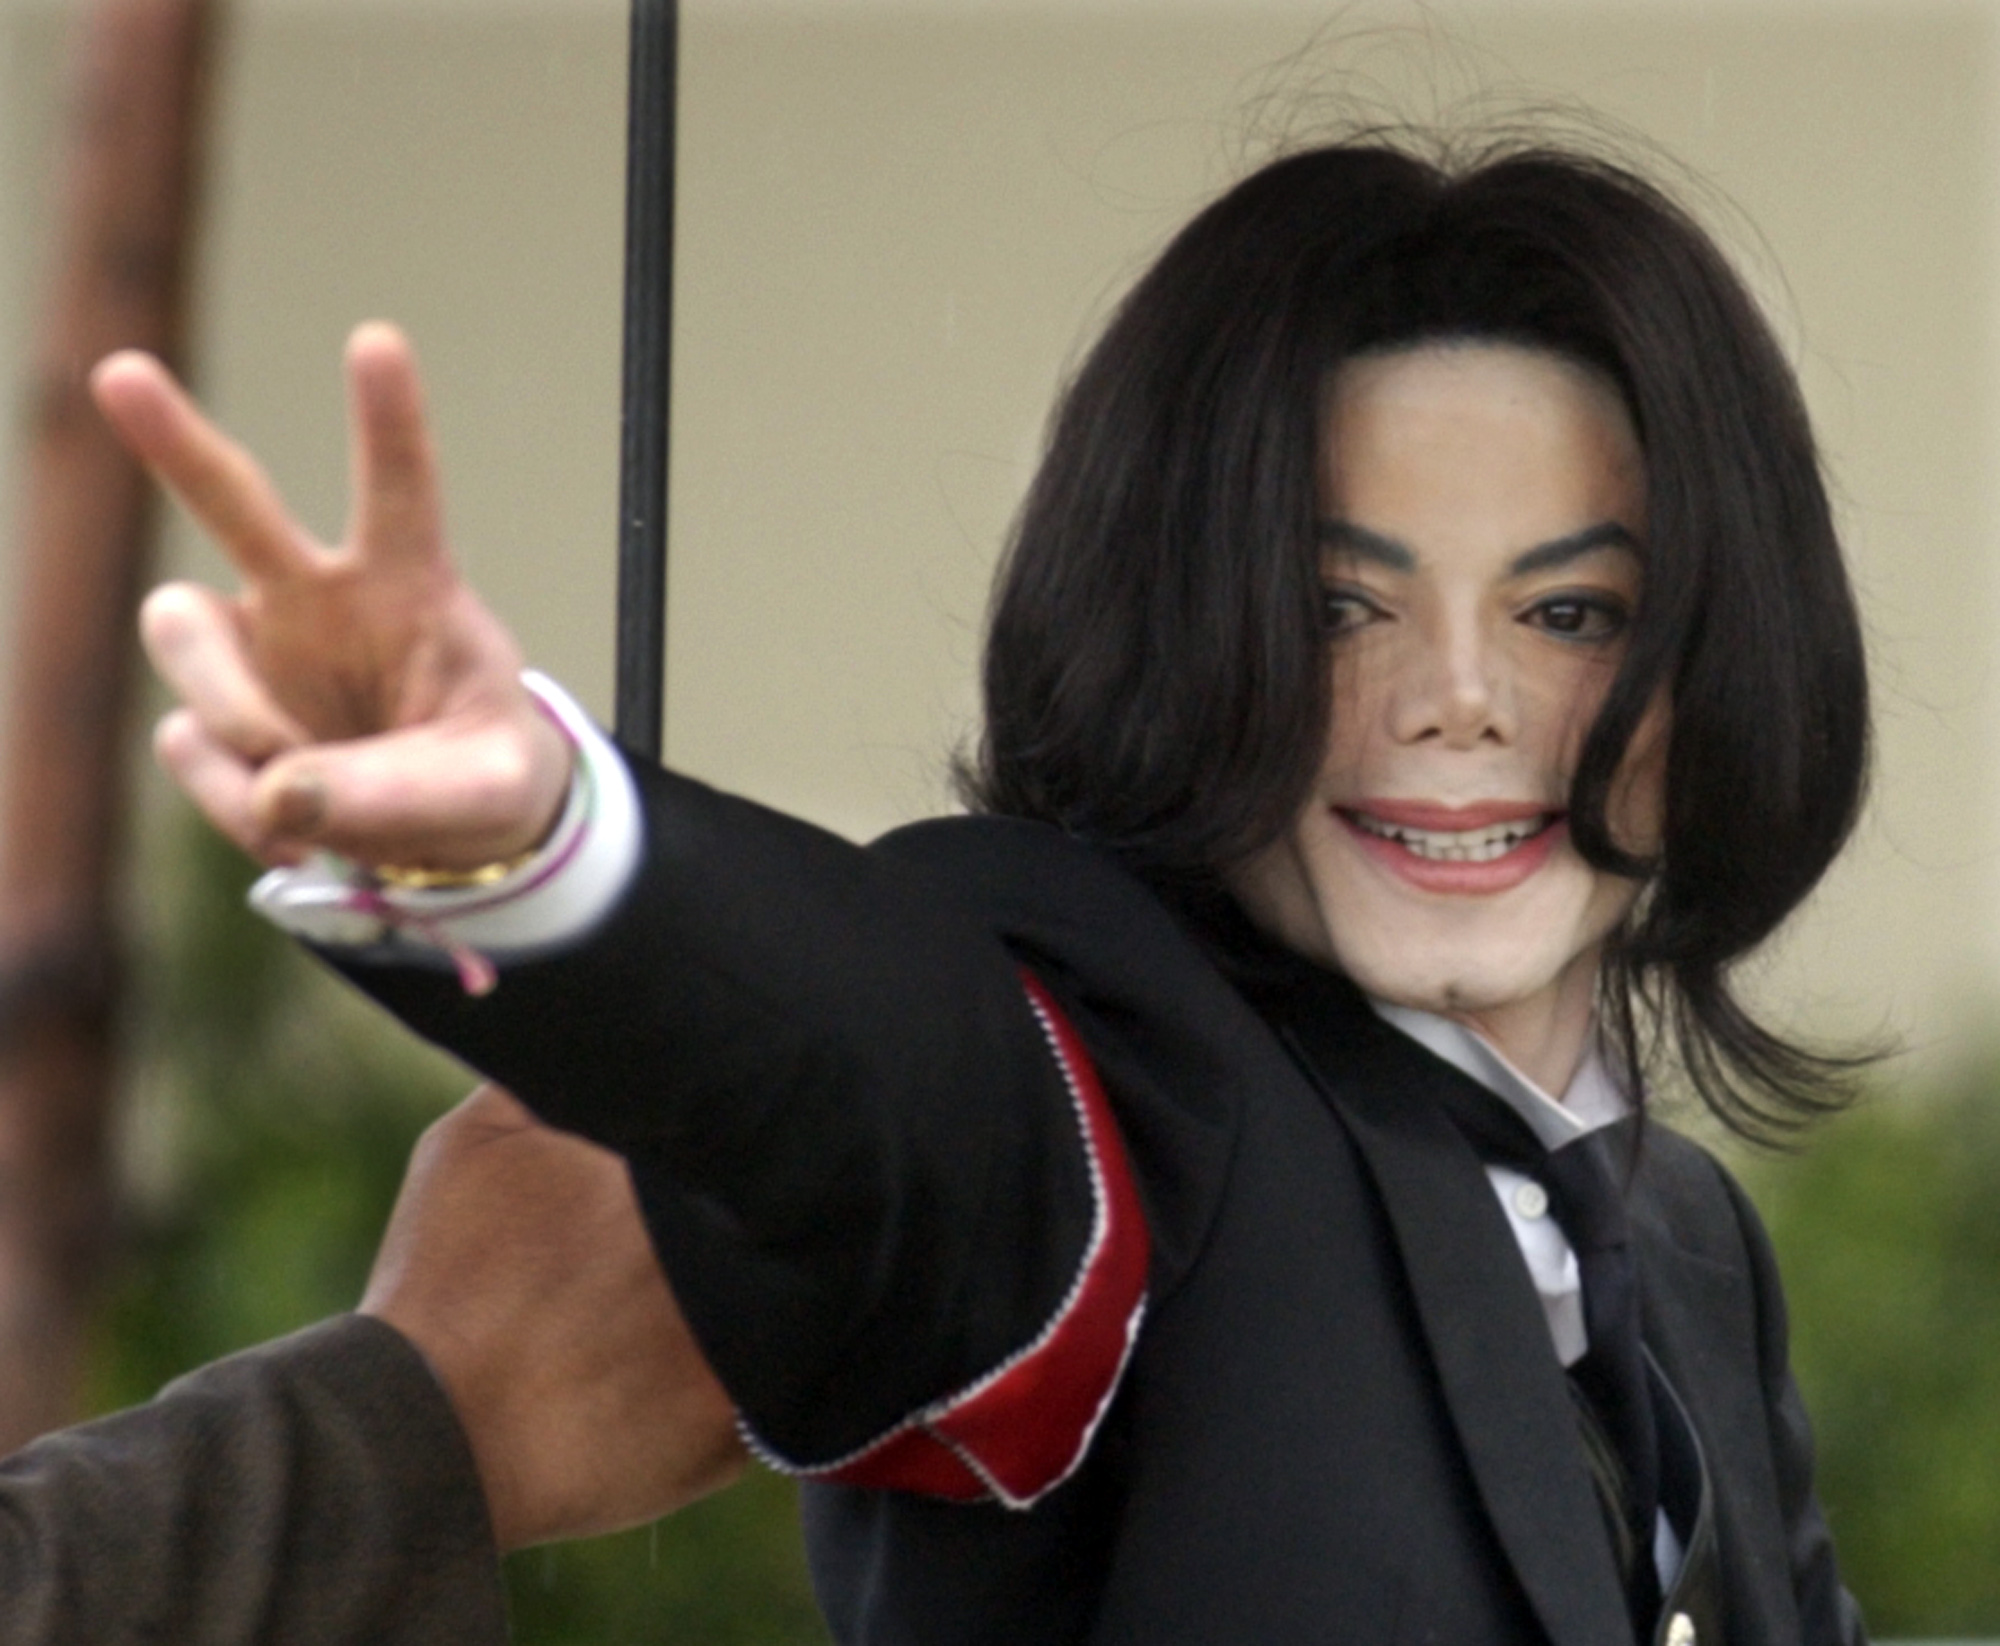 Livvakt, The King of Pop, Michael Jackson